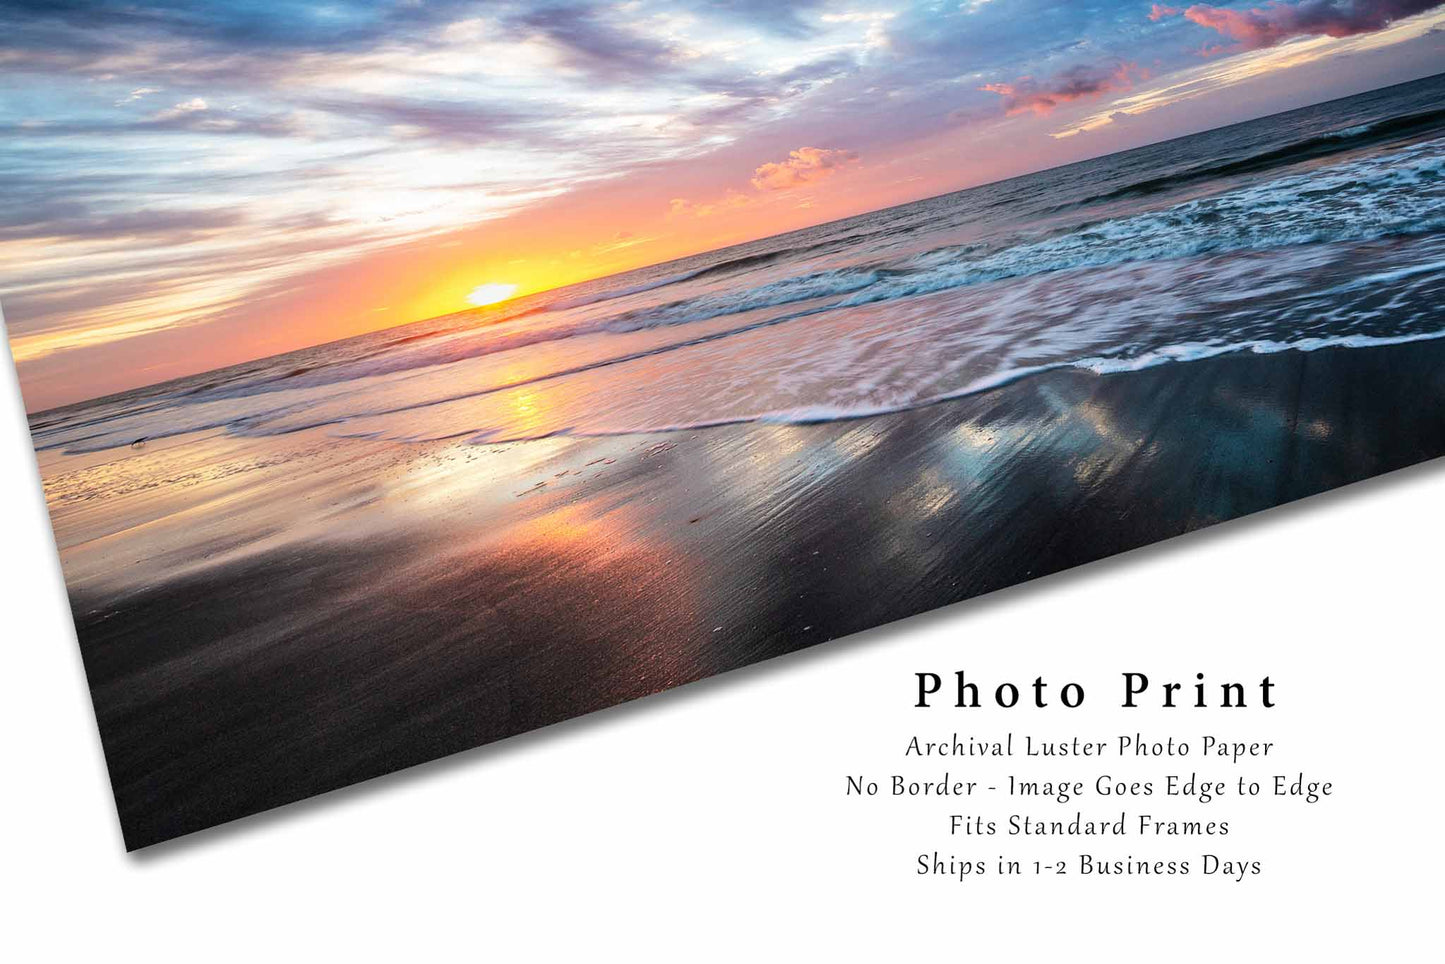 Coastal Photography Print | Hilton Head Island Picture | South Carolina Wall Art | Beach Photo | Ocean Decor | Not Framed